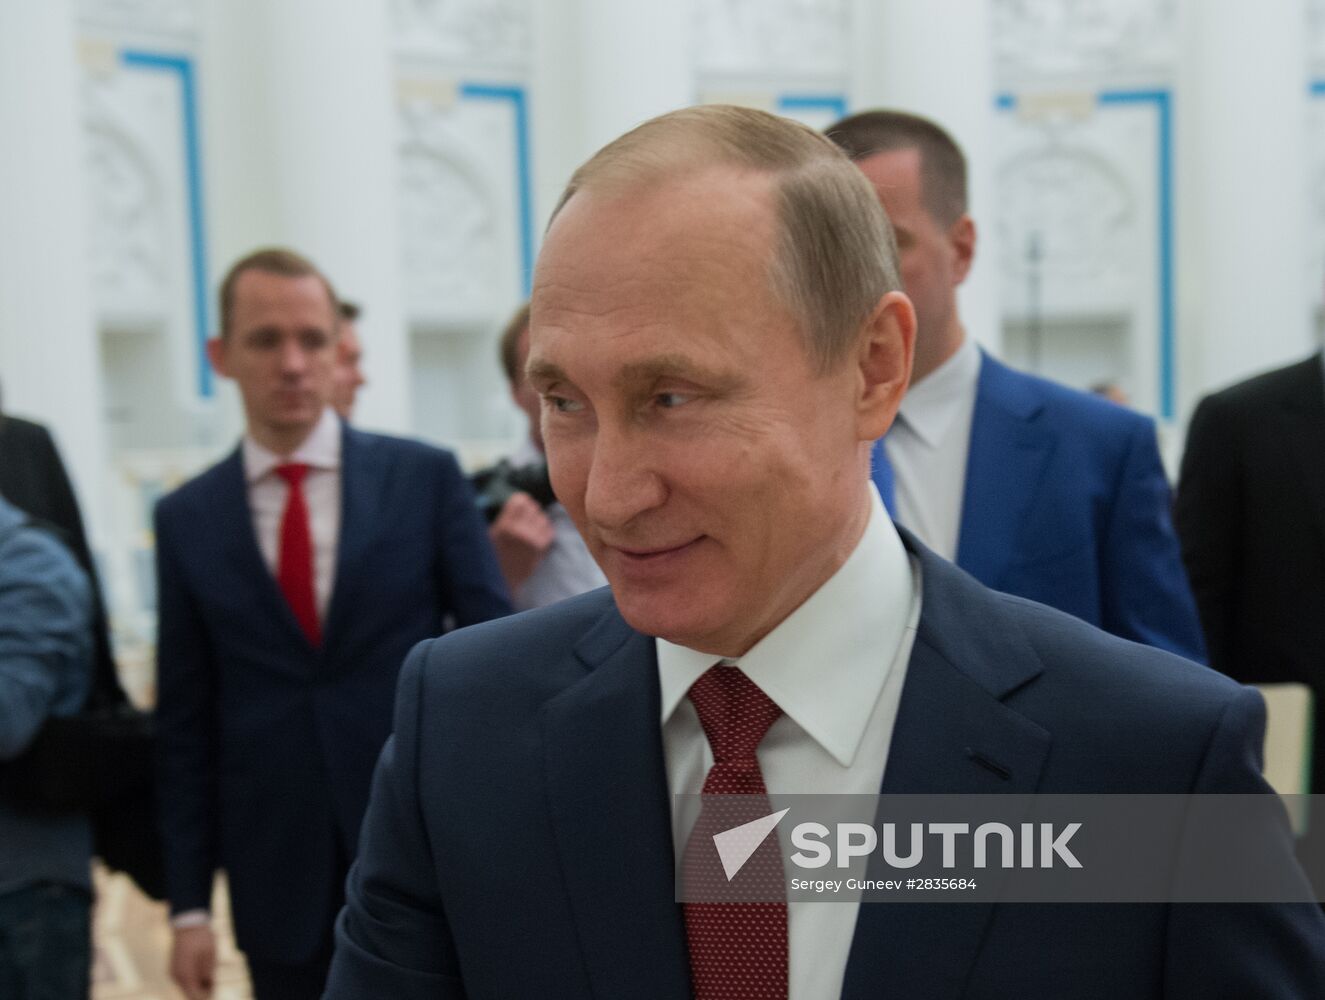 President Vladimir Putin presents Hero of Labor medals